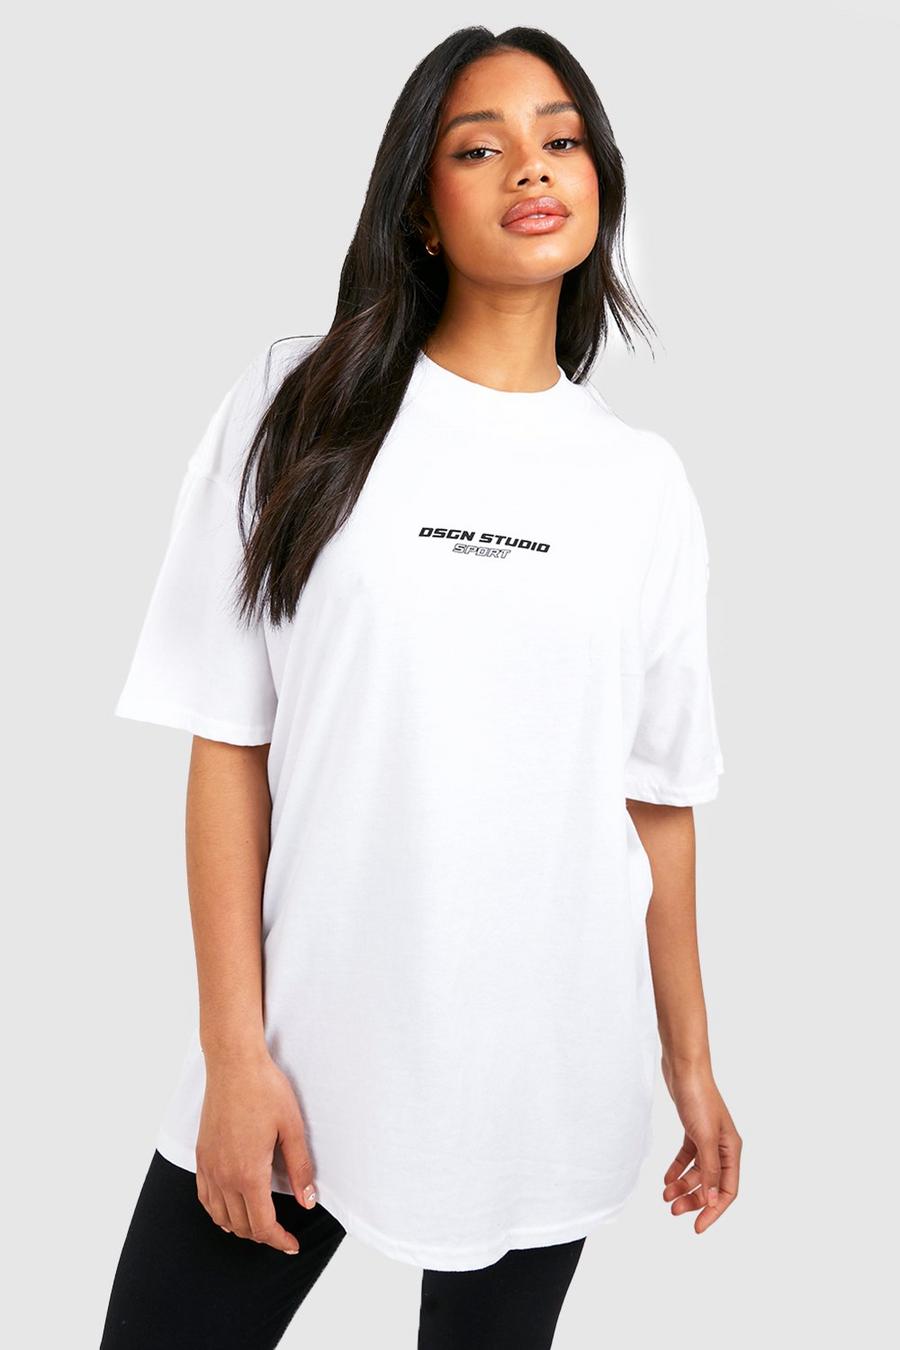 White Oversized Dsgn Studio Sports Fitness T-Shirt image number 1